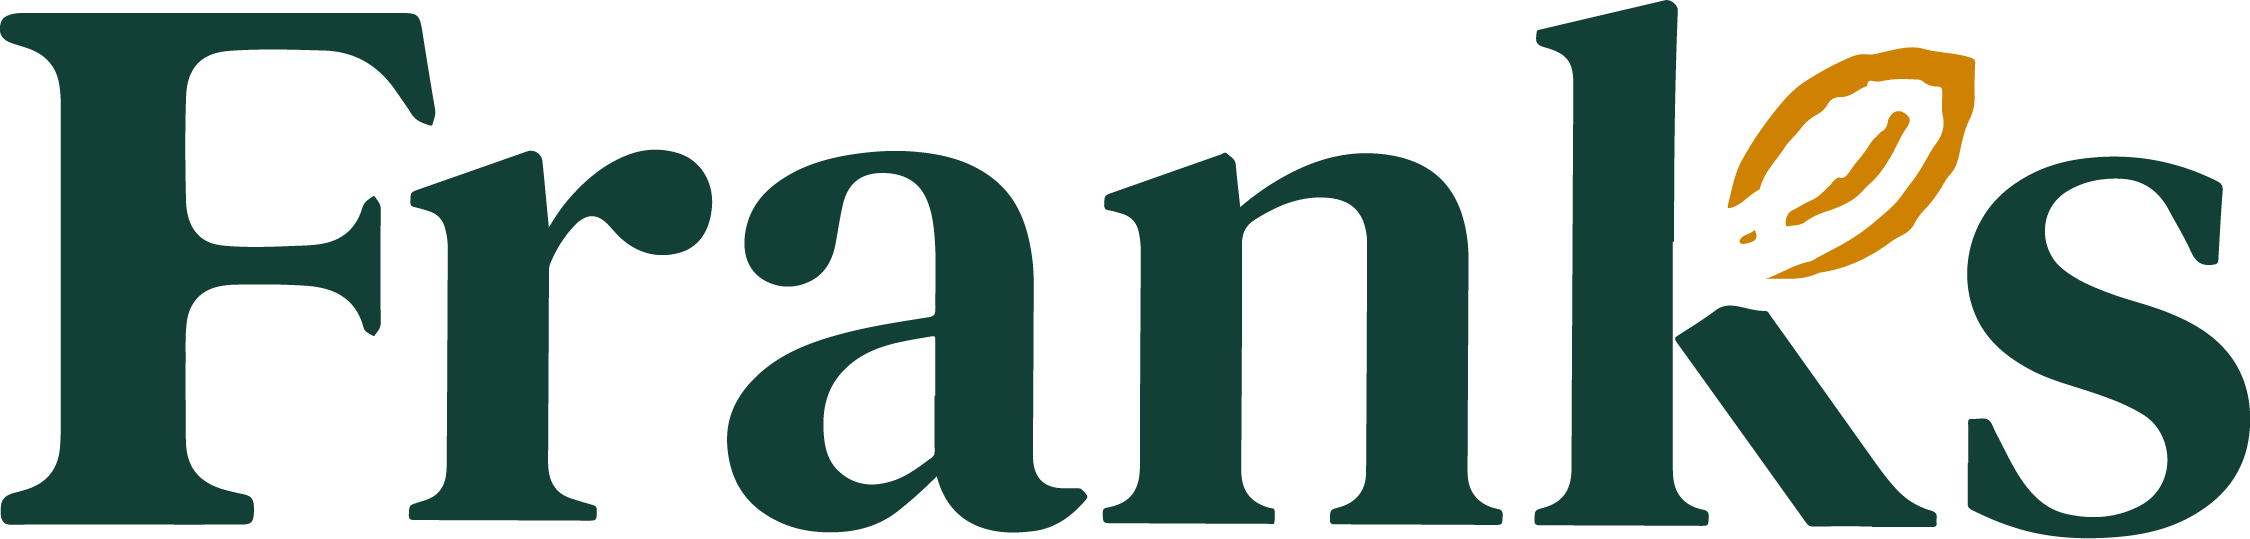 Franks Logo2